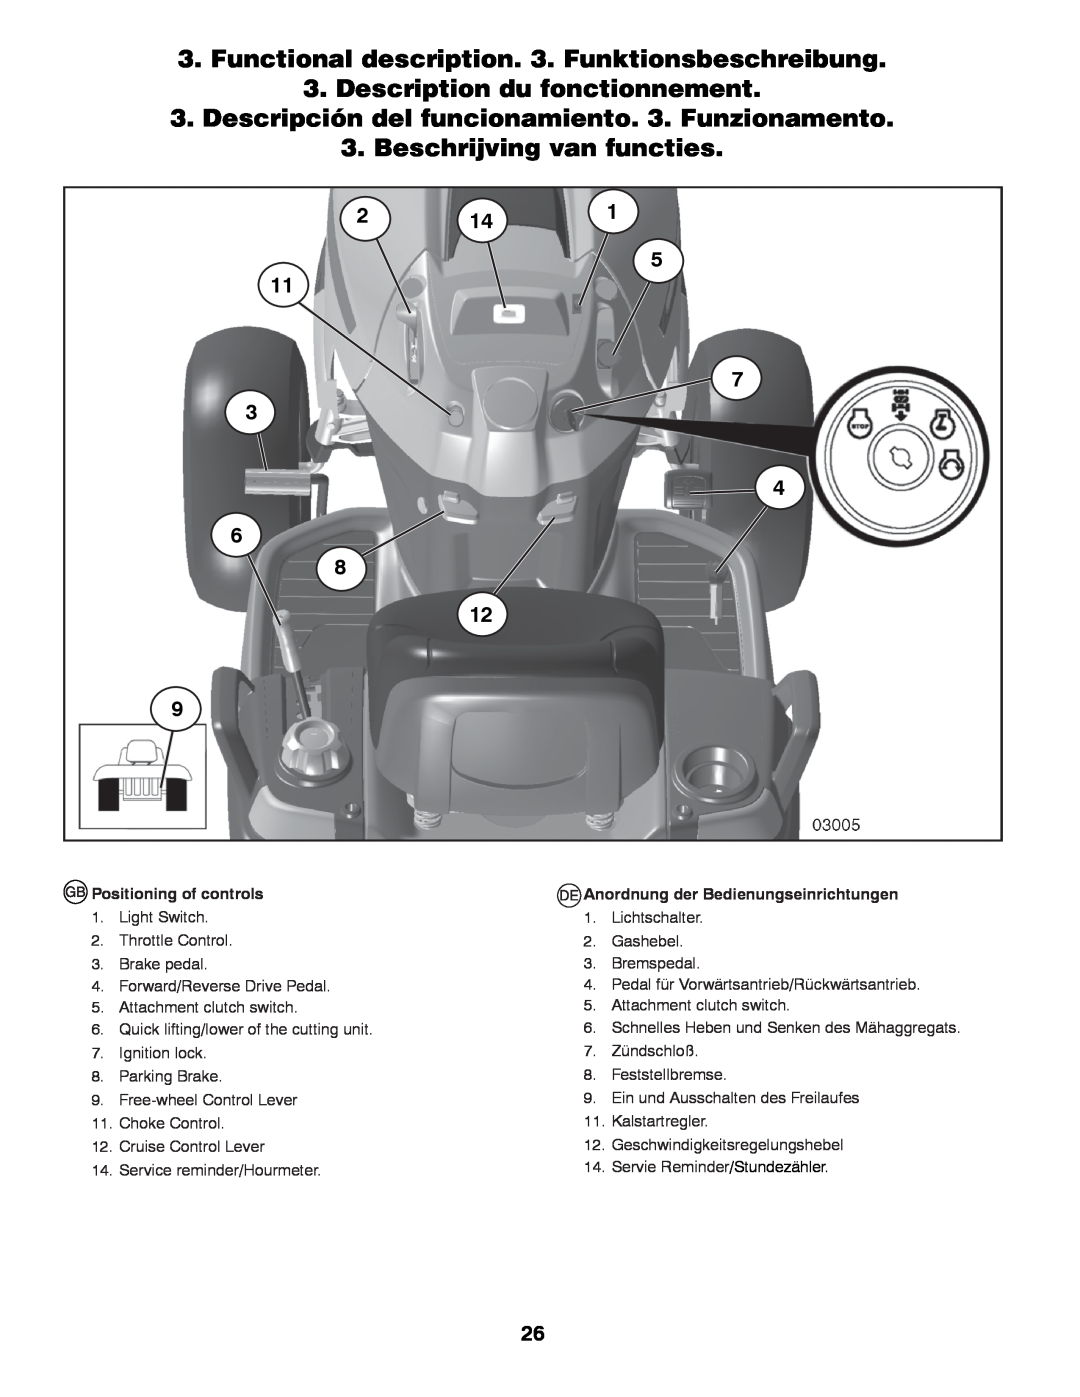 Husqvarna GTH260TWIN instruction manual Description du fonctionnement, Beschrijving van functies, Positioning of controls 